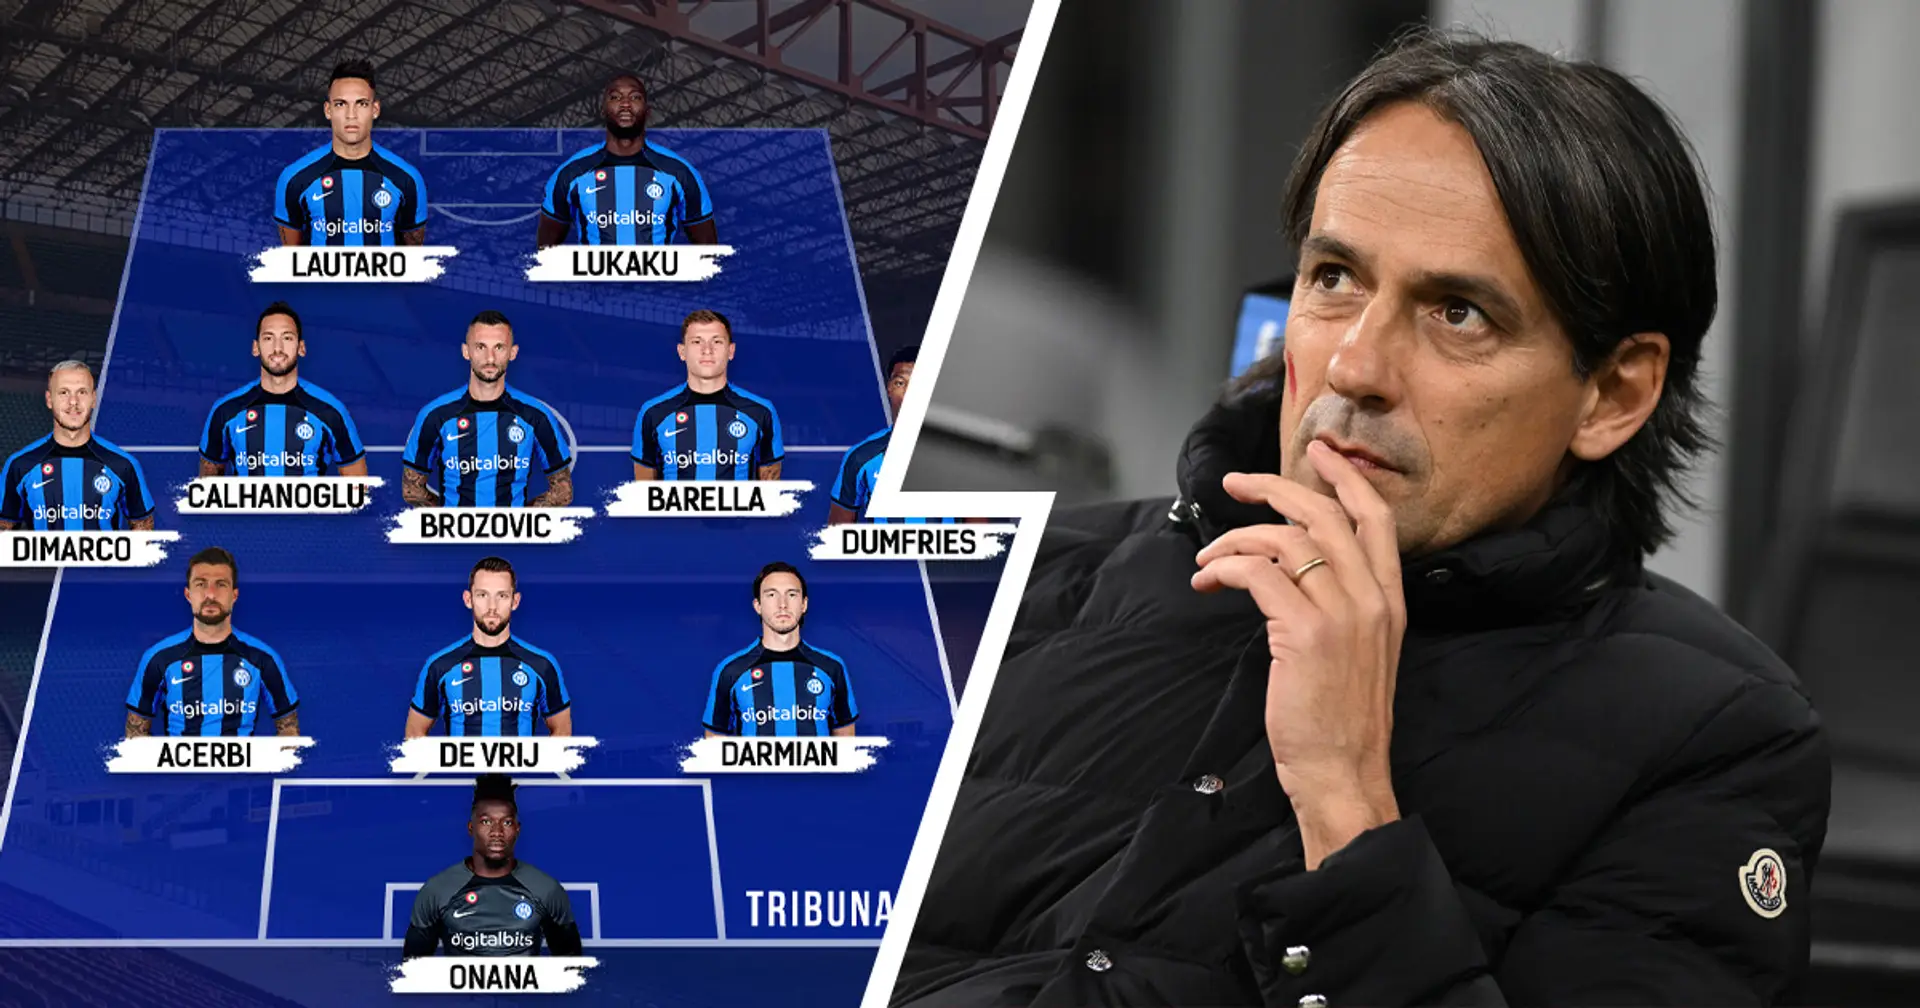 FORMAZIONI UFFICIALI 👉 Inter vs Juventus: difesa rimaneggiata per Inzaghi, Lukaku dal 1'